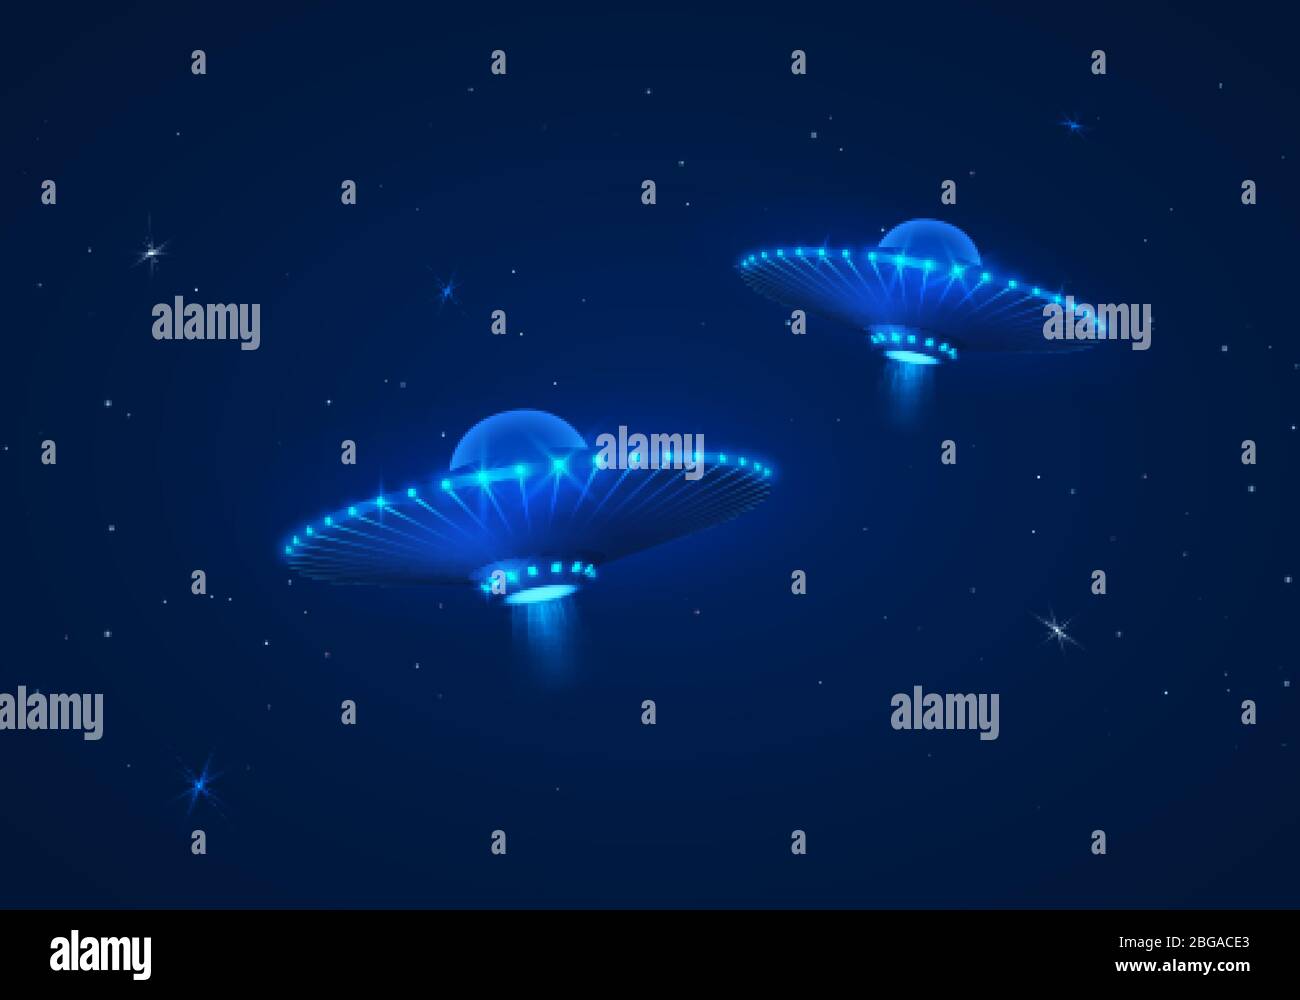 Couple of UFO in dark blue night sky. Vector illustration Stock Vector